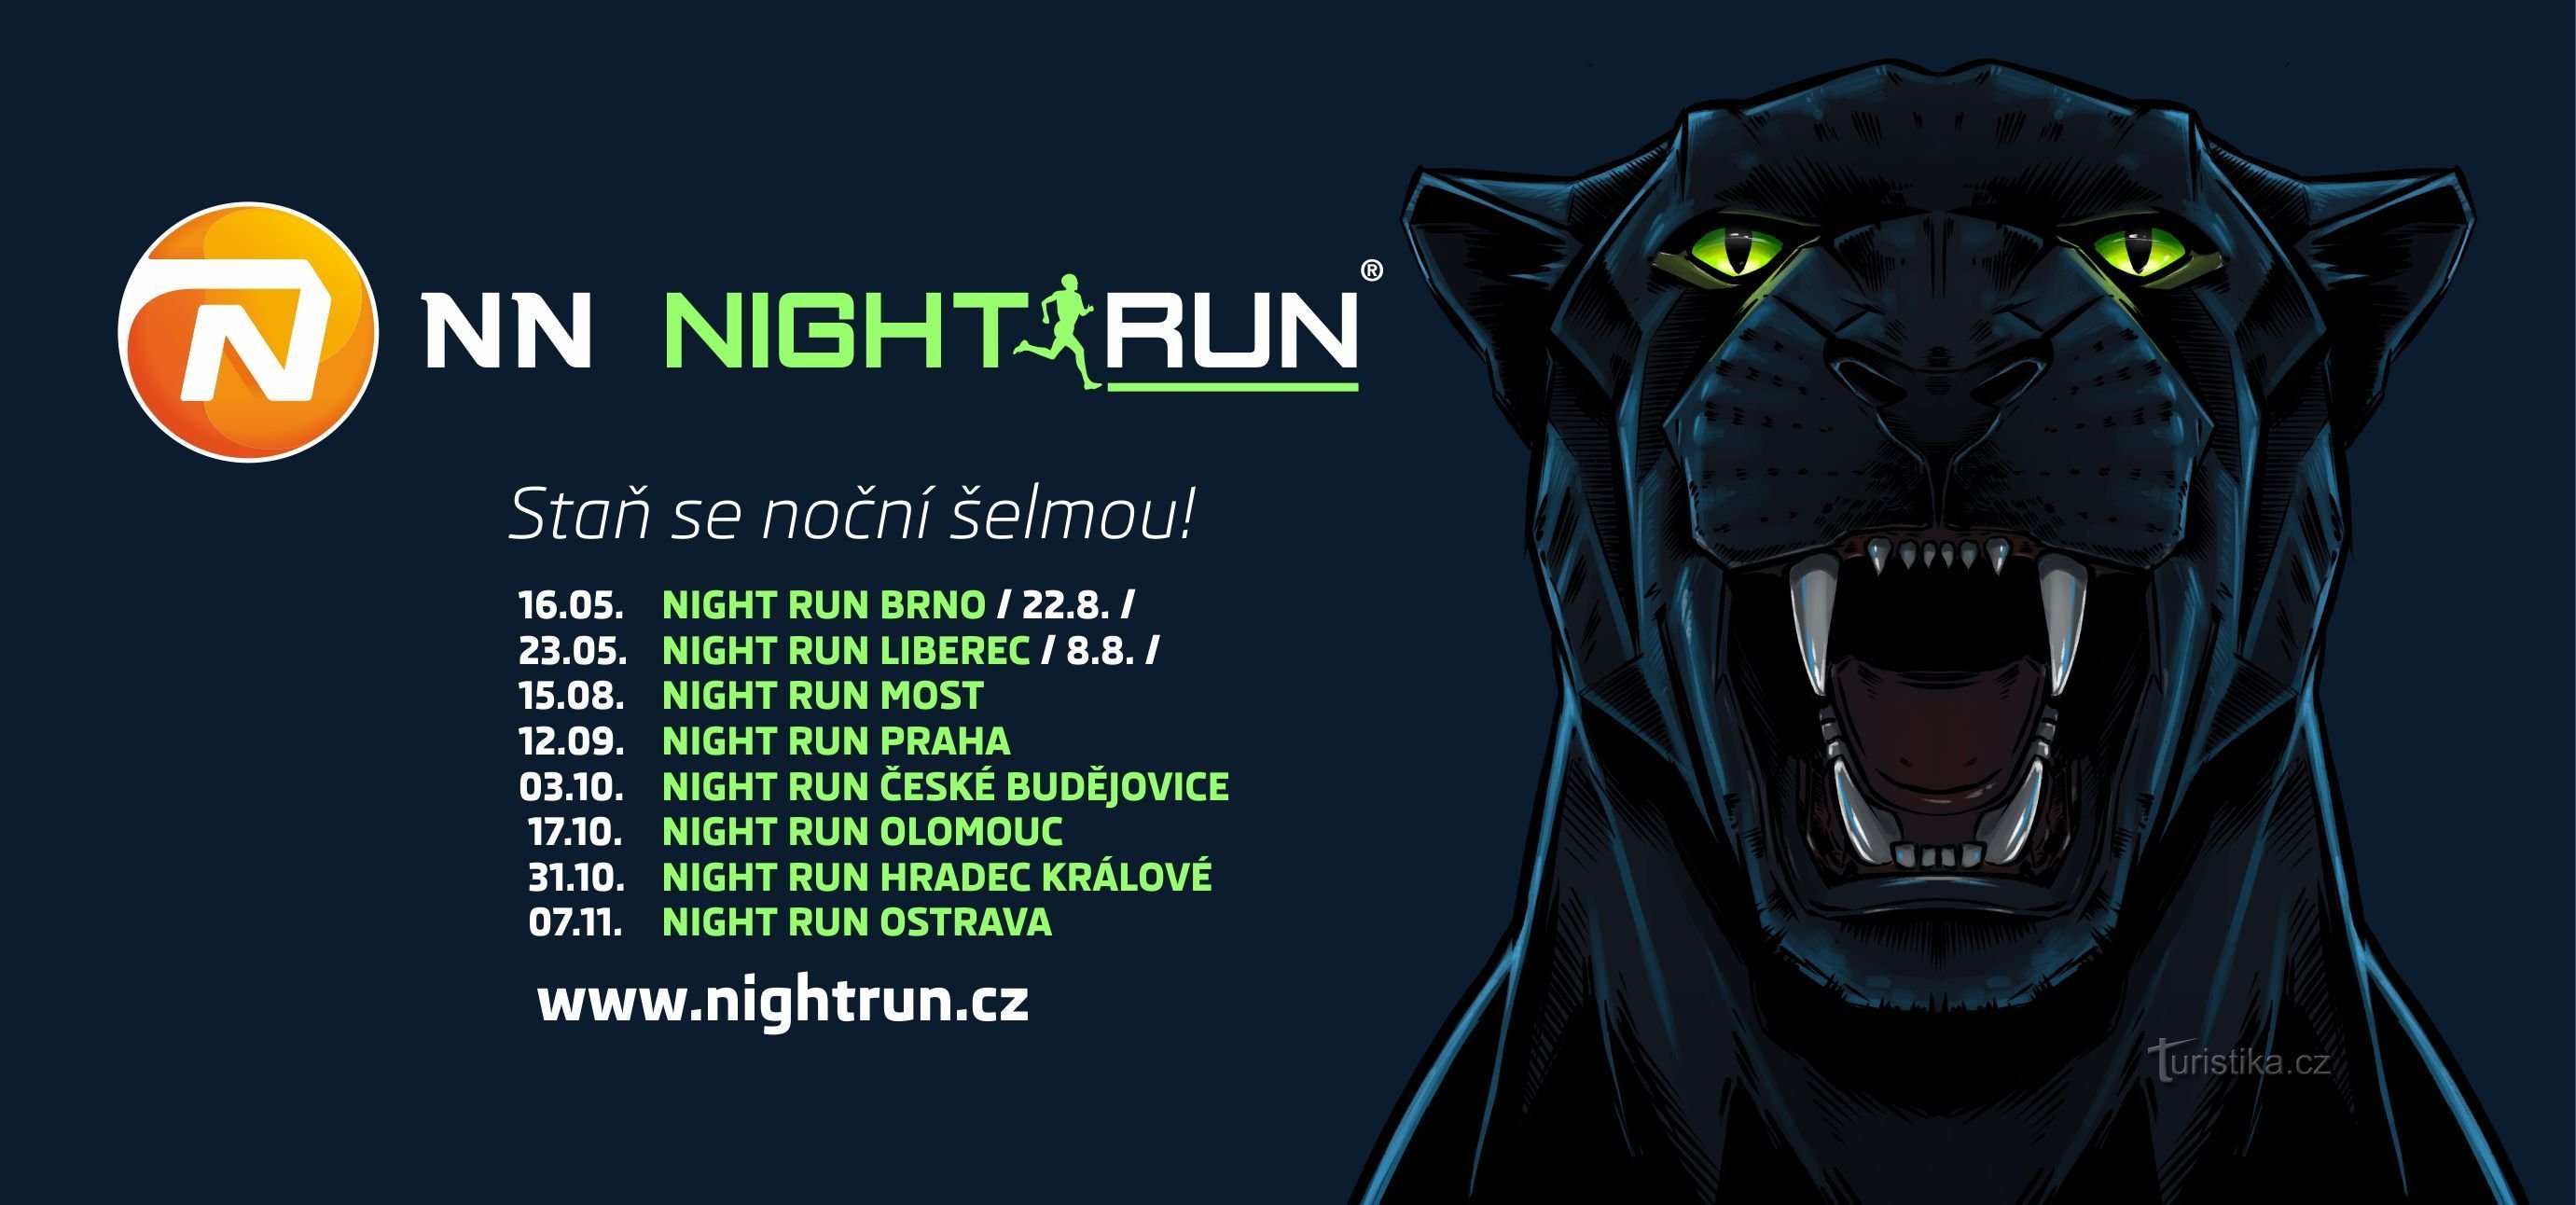 NN NIGHT RUN: Επτά λόγοι για να τρέξετε